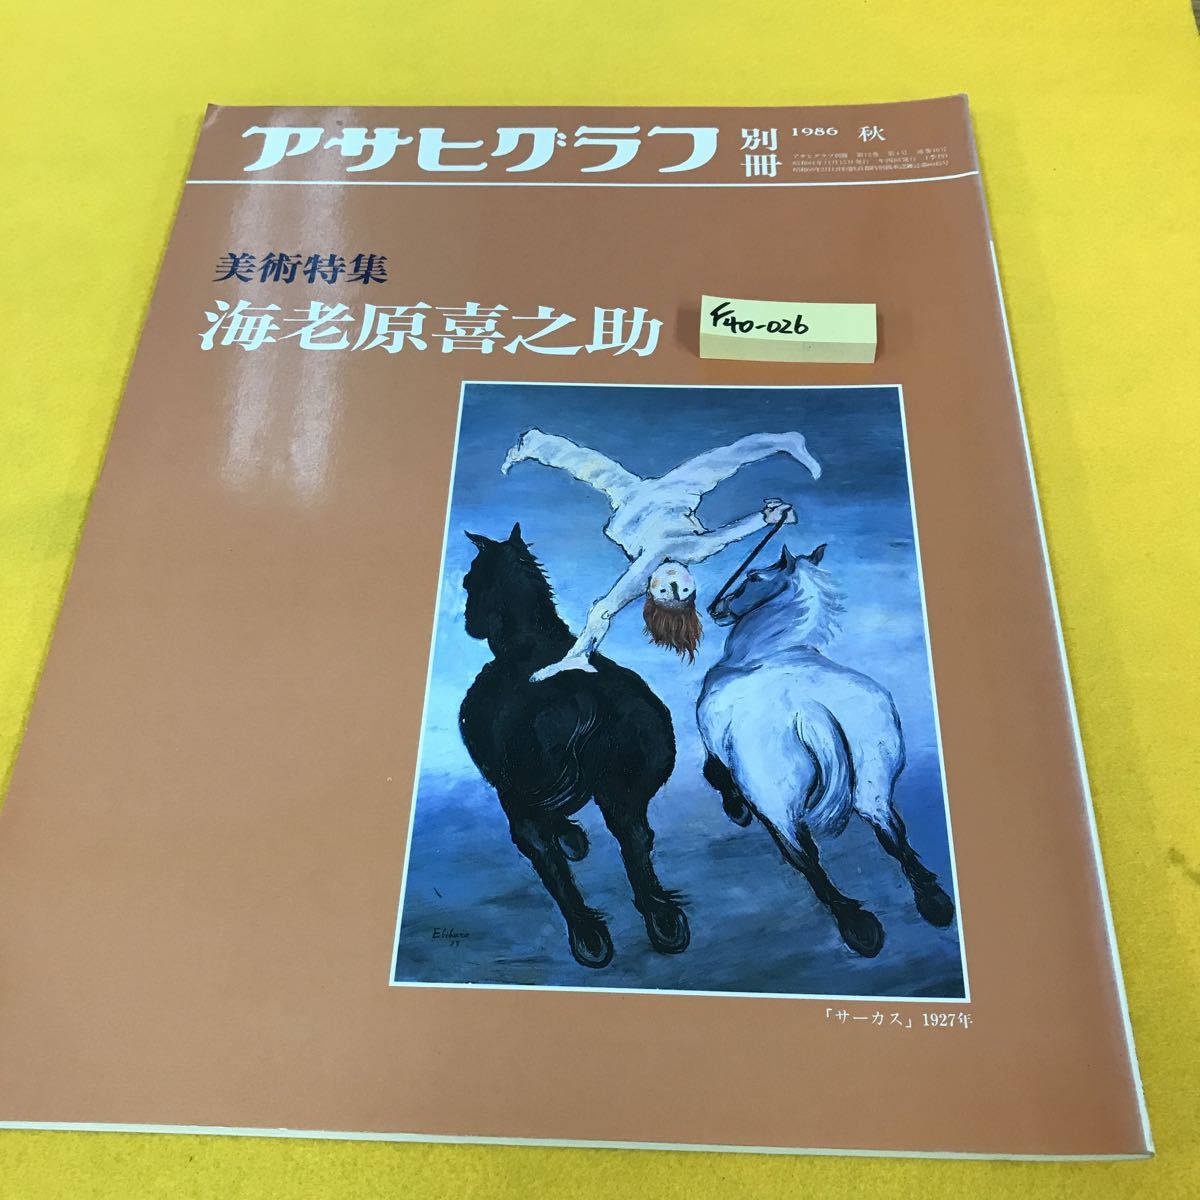 F40-026 アサヒグラフ 別冊 '86 秋 美術特集 海老原喜之助 朝日新聞社